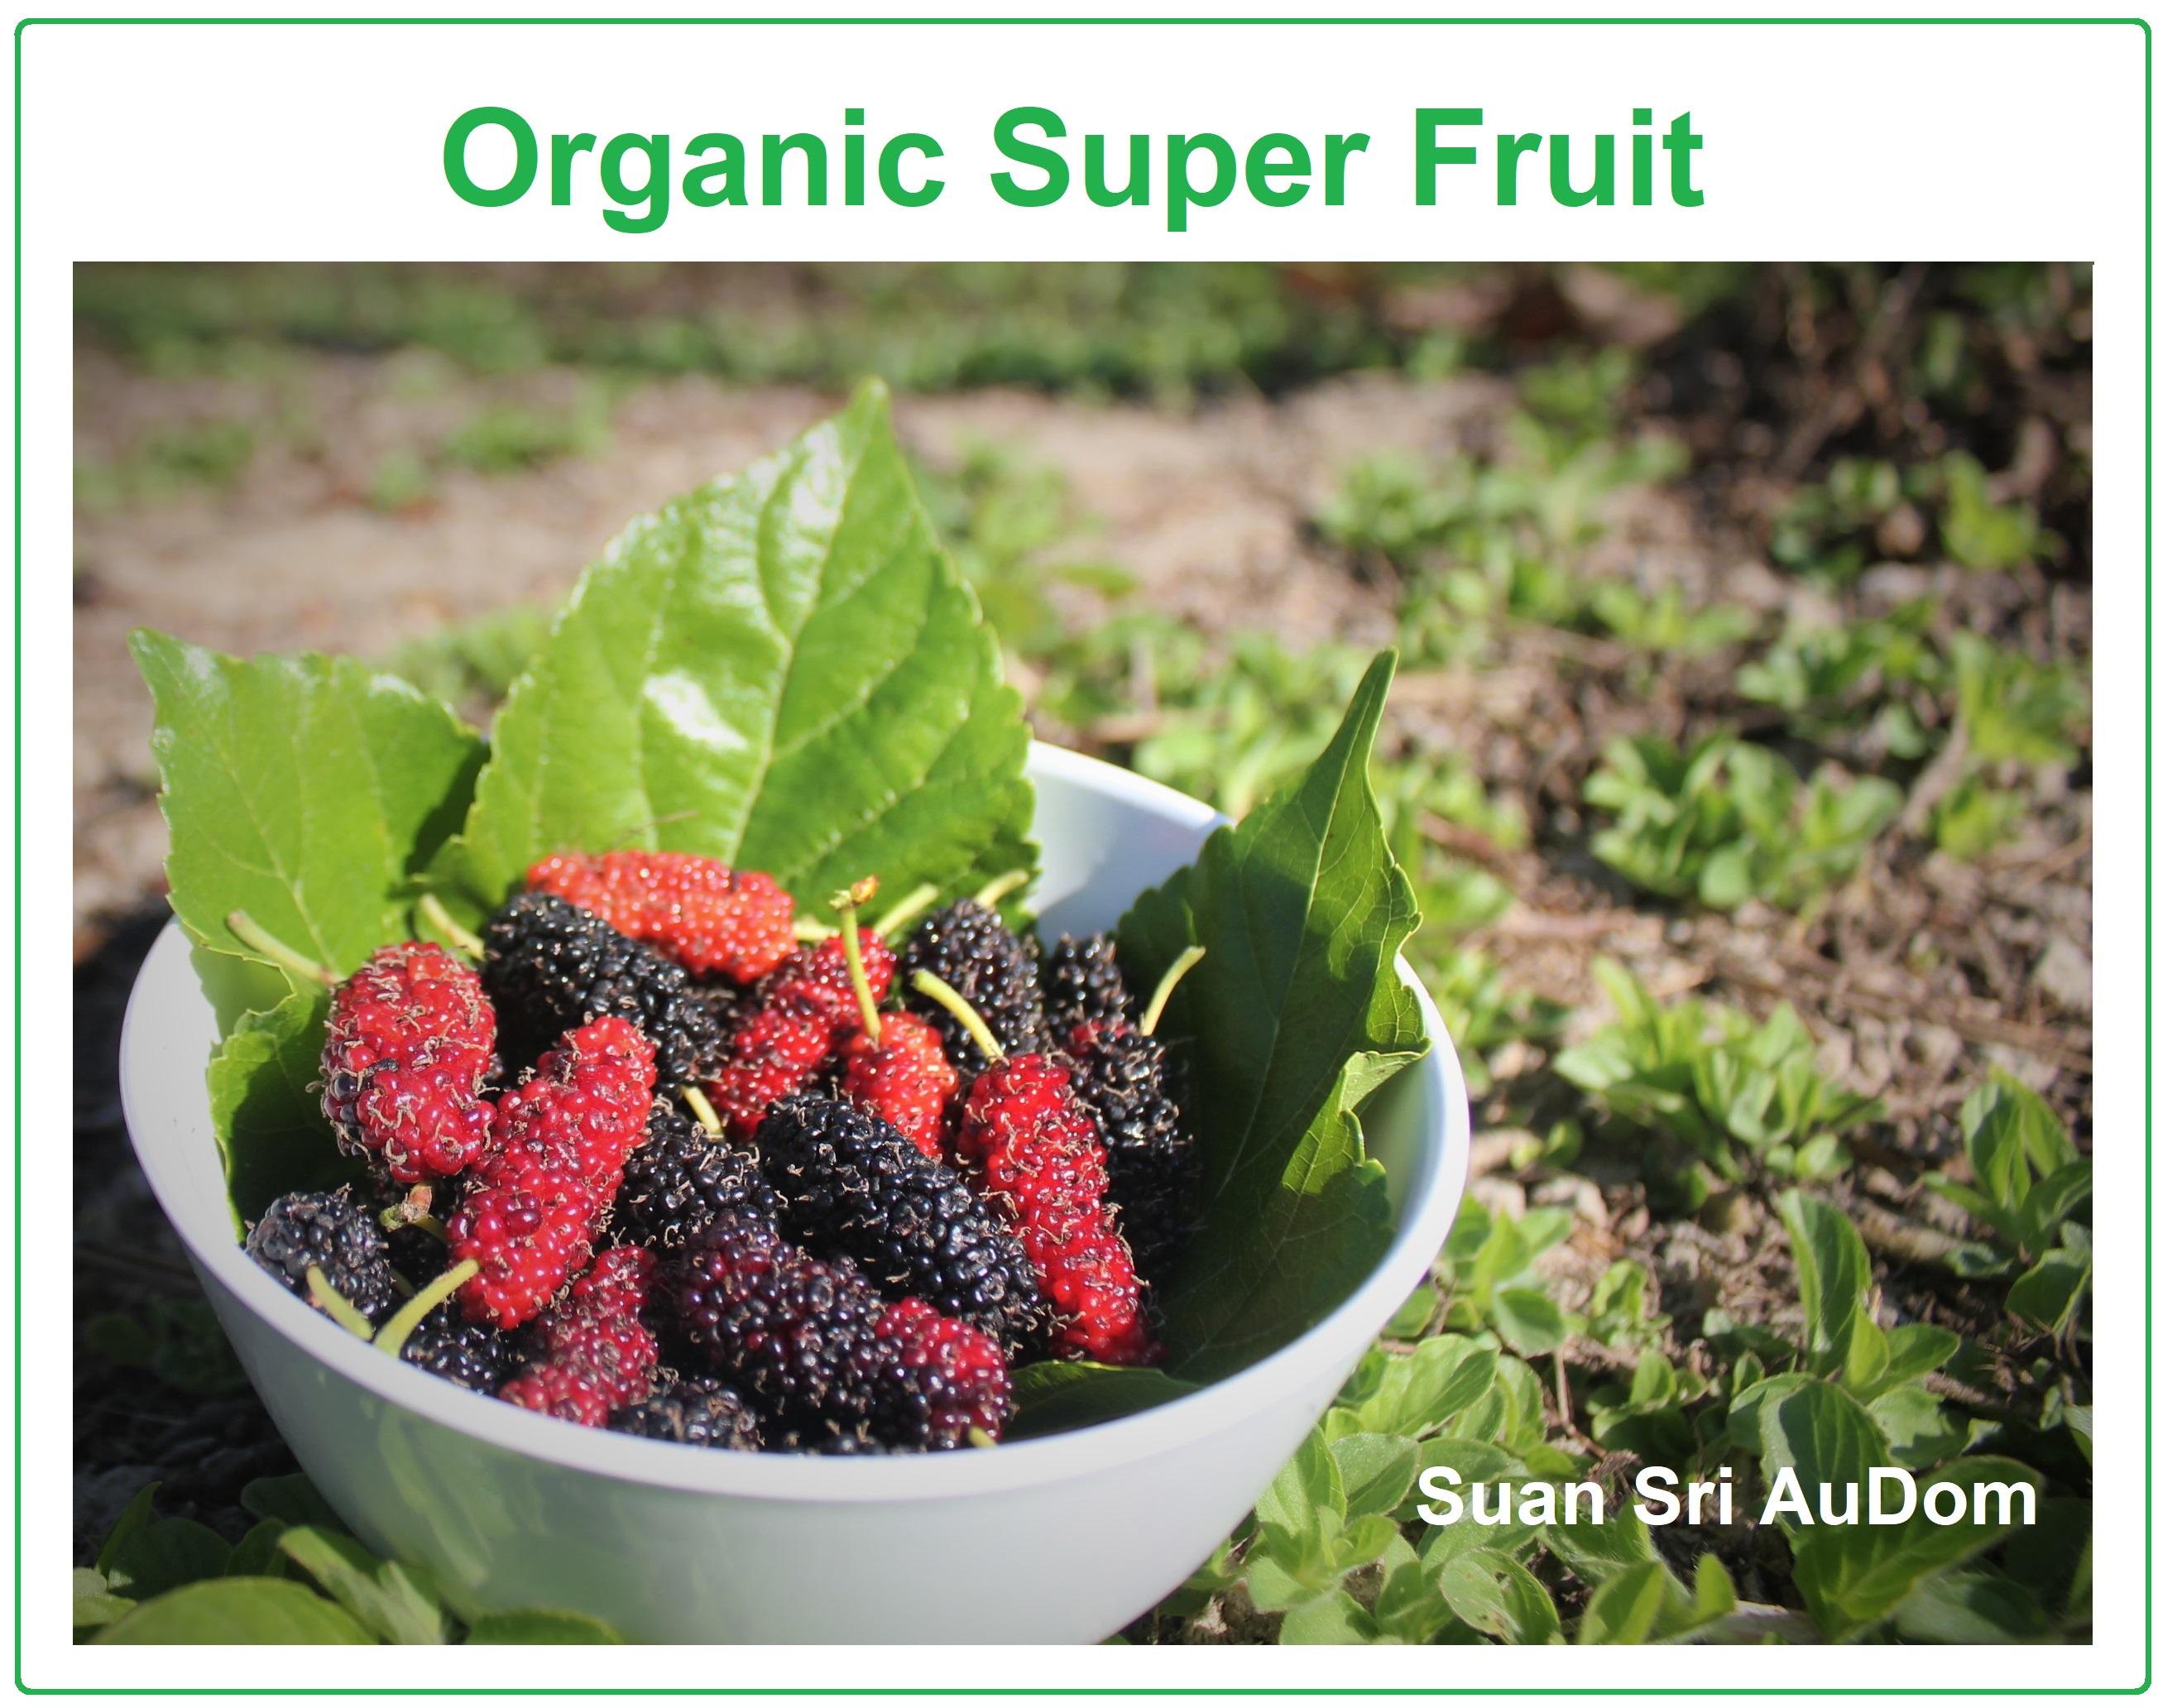 lazada  กิ่งพันธุ์ มัลเบอร์รี่ Mulberry ลูกดก หวานอร่อยและมากสรรพคุณ Organic Super Fruit ปลอดสารพิษ100% ชุดละ 10 กิ่ง (เเถมฟรีรับ อีก 12 กิ่งทันที) บริการให้คำปรึกษาฟรีทุกขั้นตอนจนได้ผลผลิต และเก็บเงินปลายทางได้